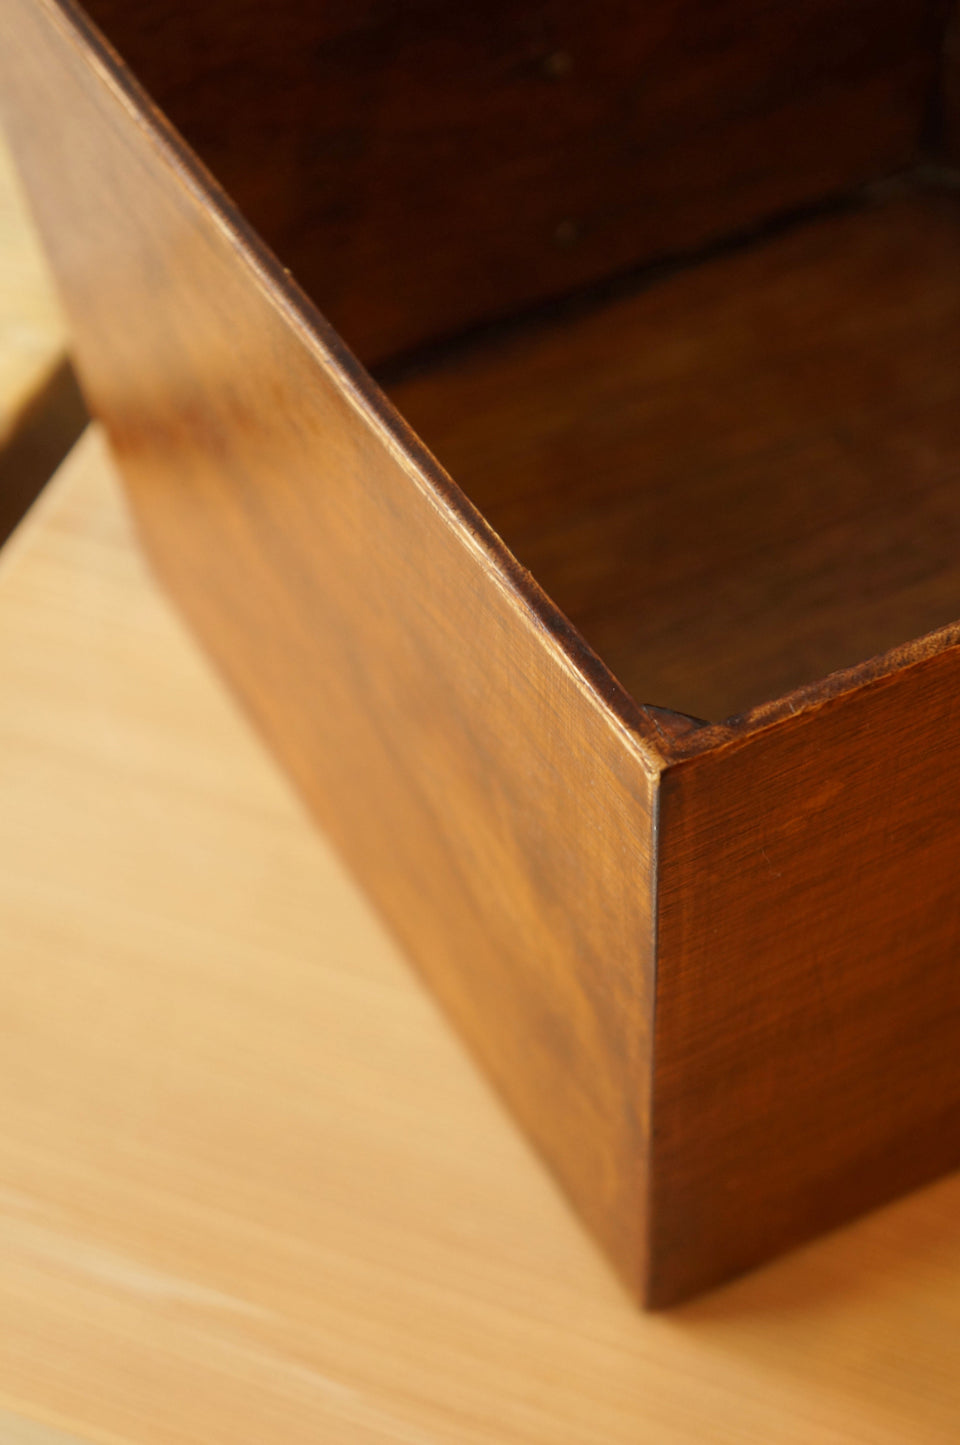 [1]Wooden Tool Box